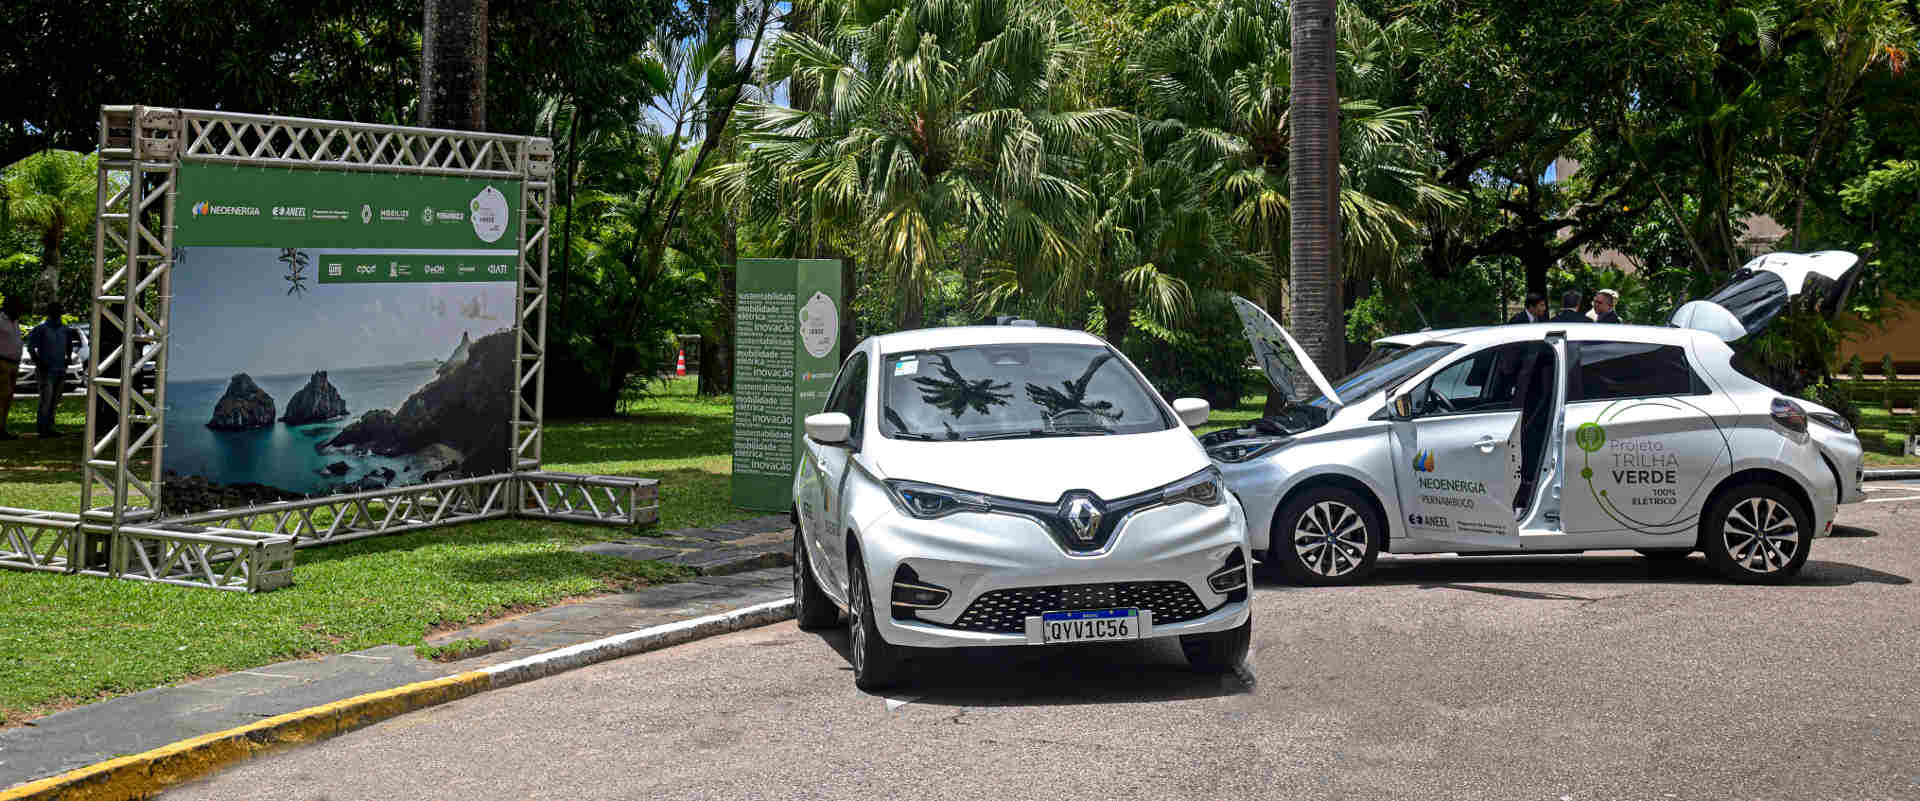 Foto de capa do Renault Zoe E-Tech elétrico que irá para Fernando de Noronha